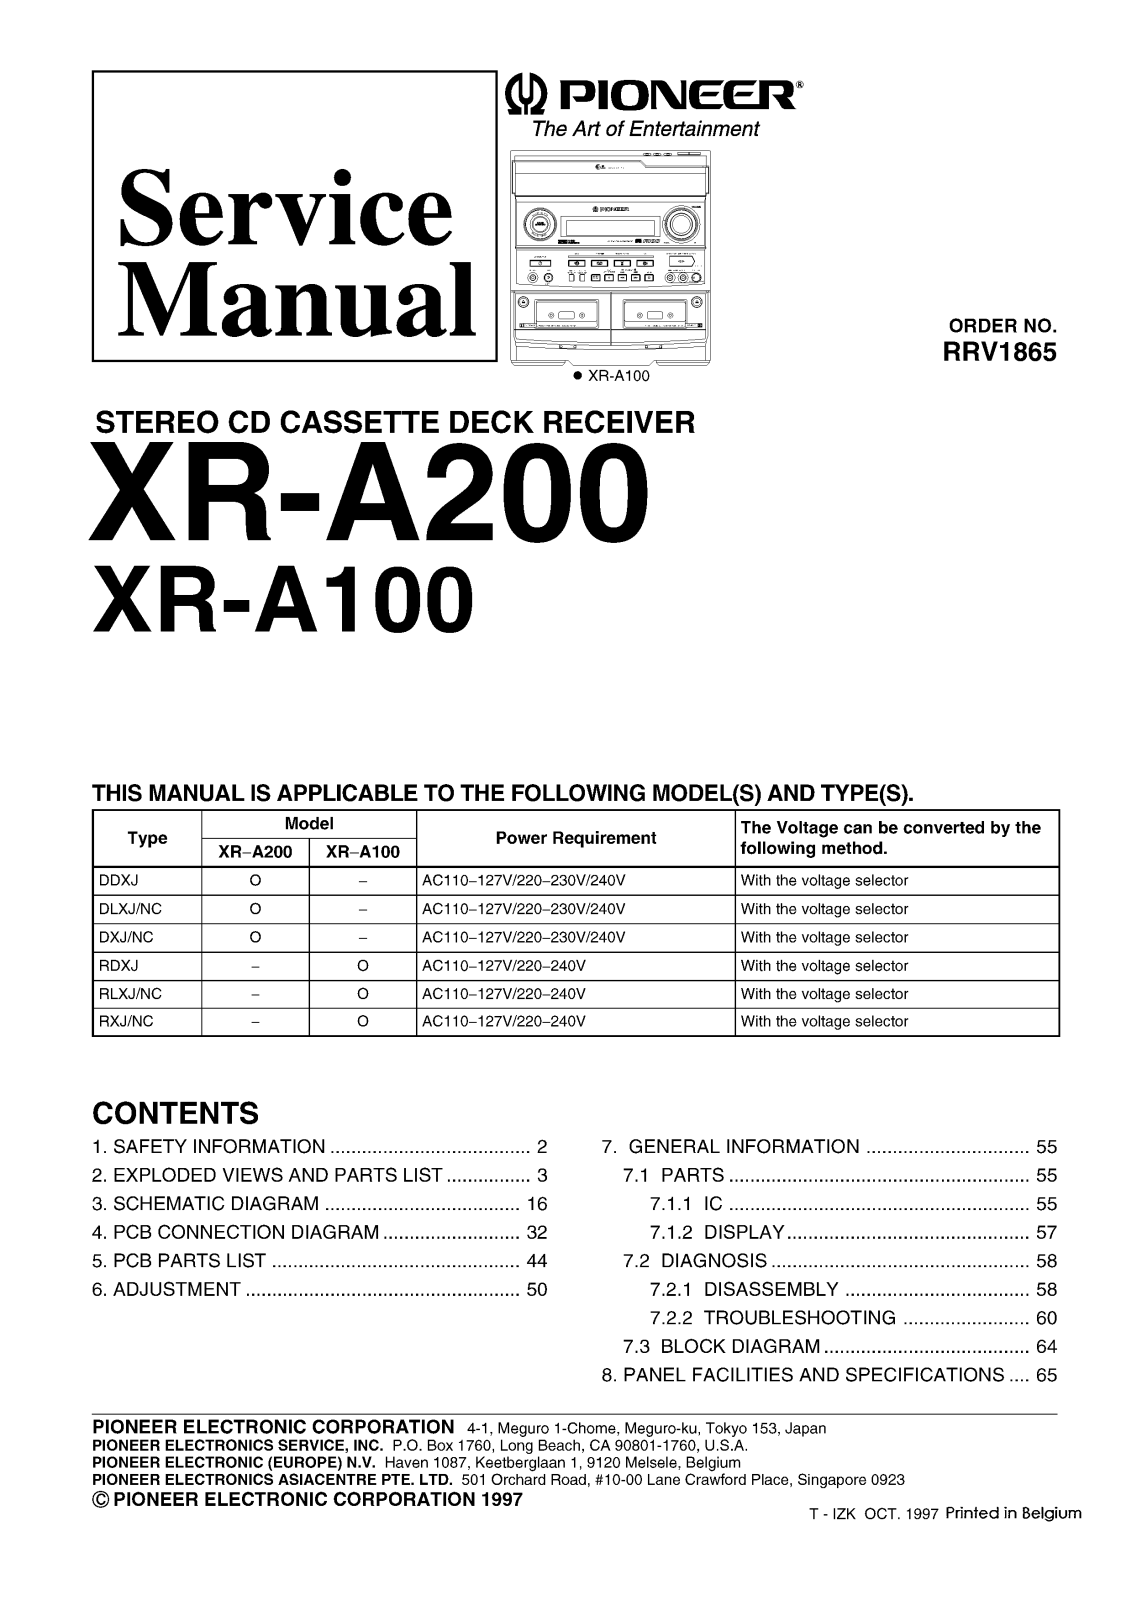 Pioneer XRA-200 Service manual